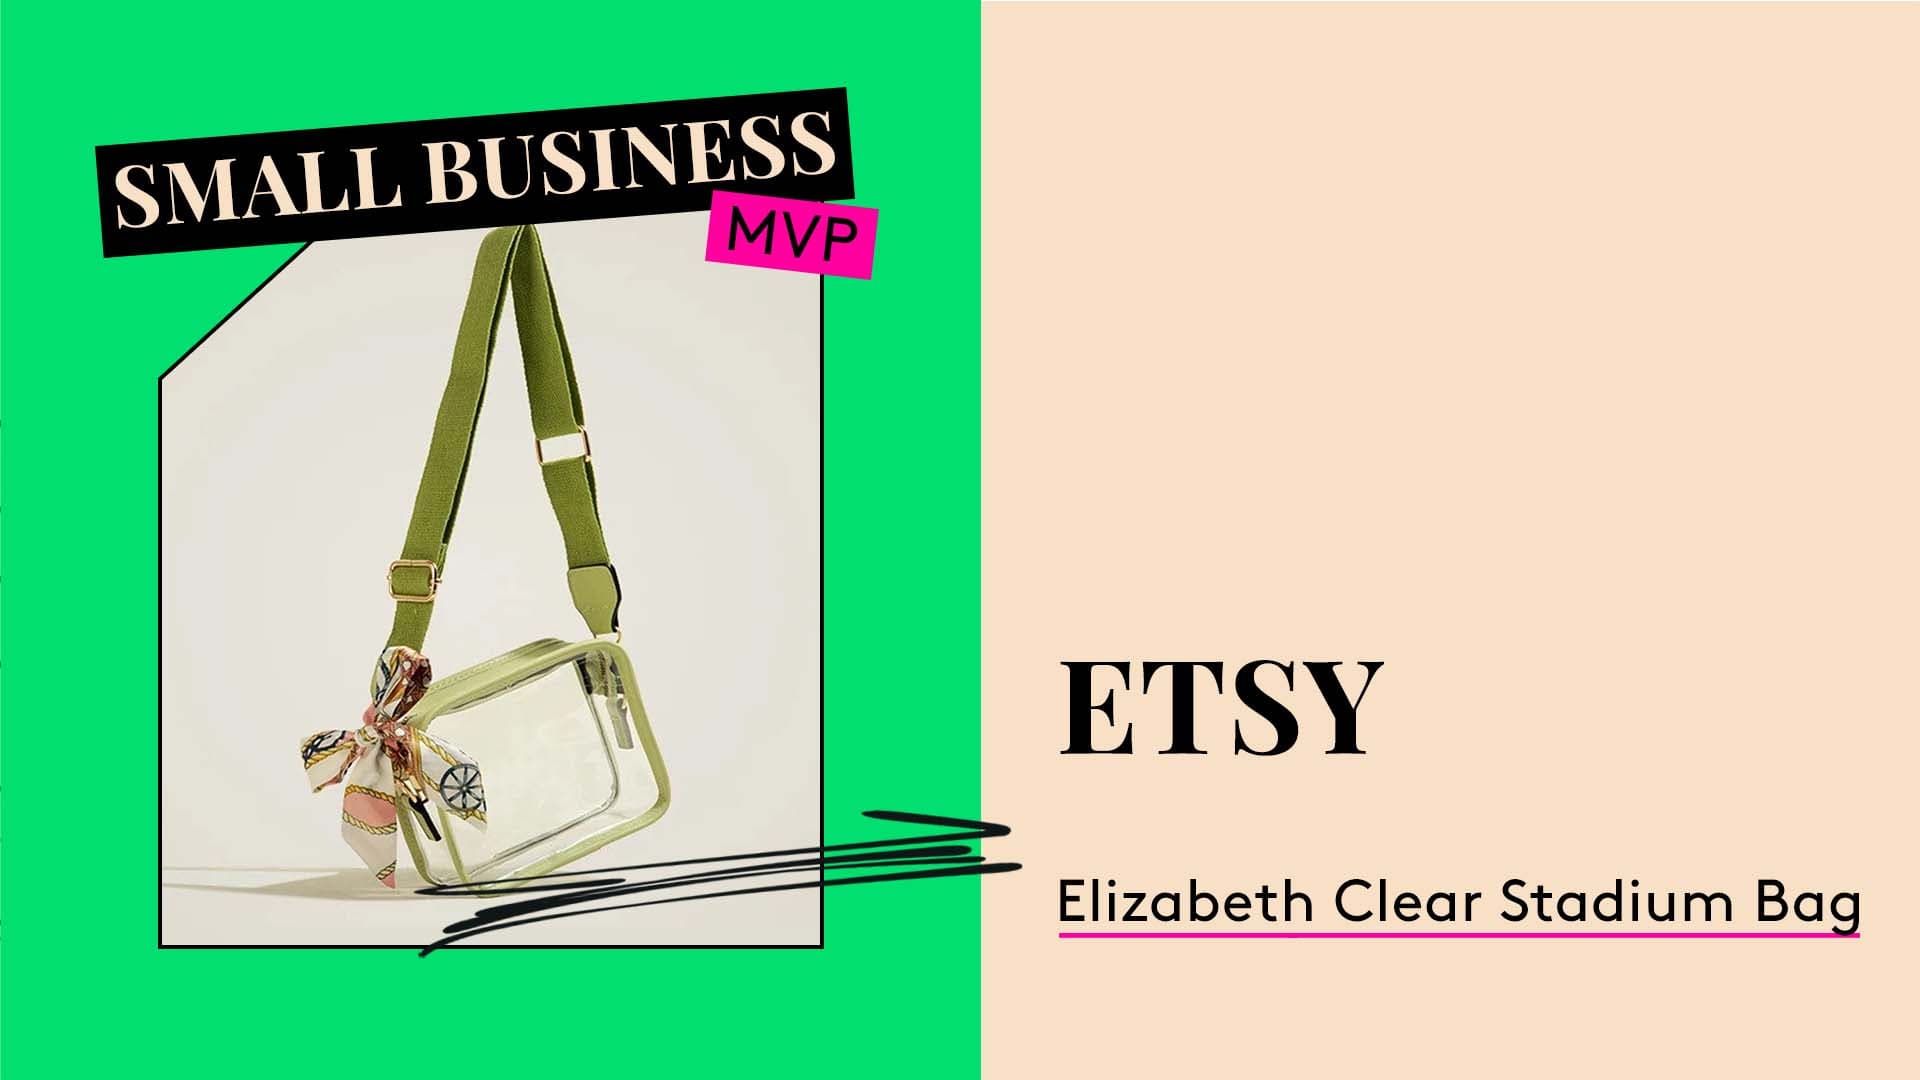 Small Business MVP. Etsy Elizabeth Clear Stadium Bag.